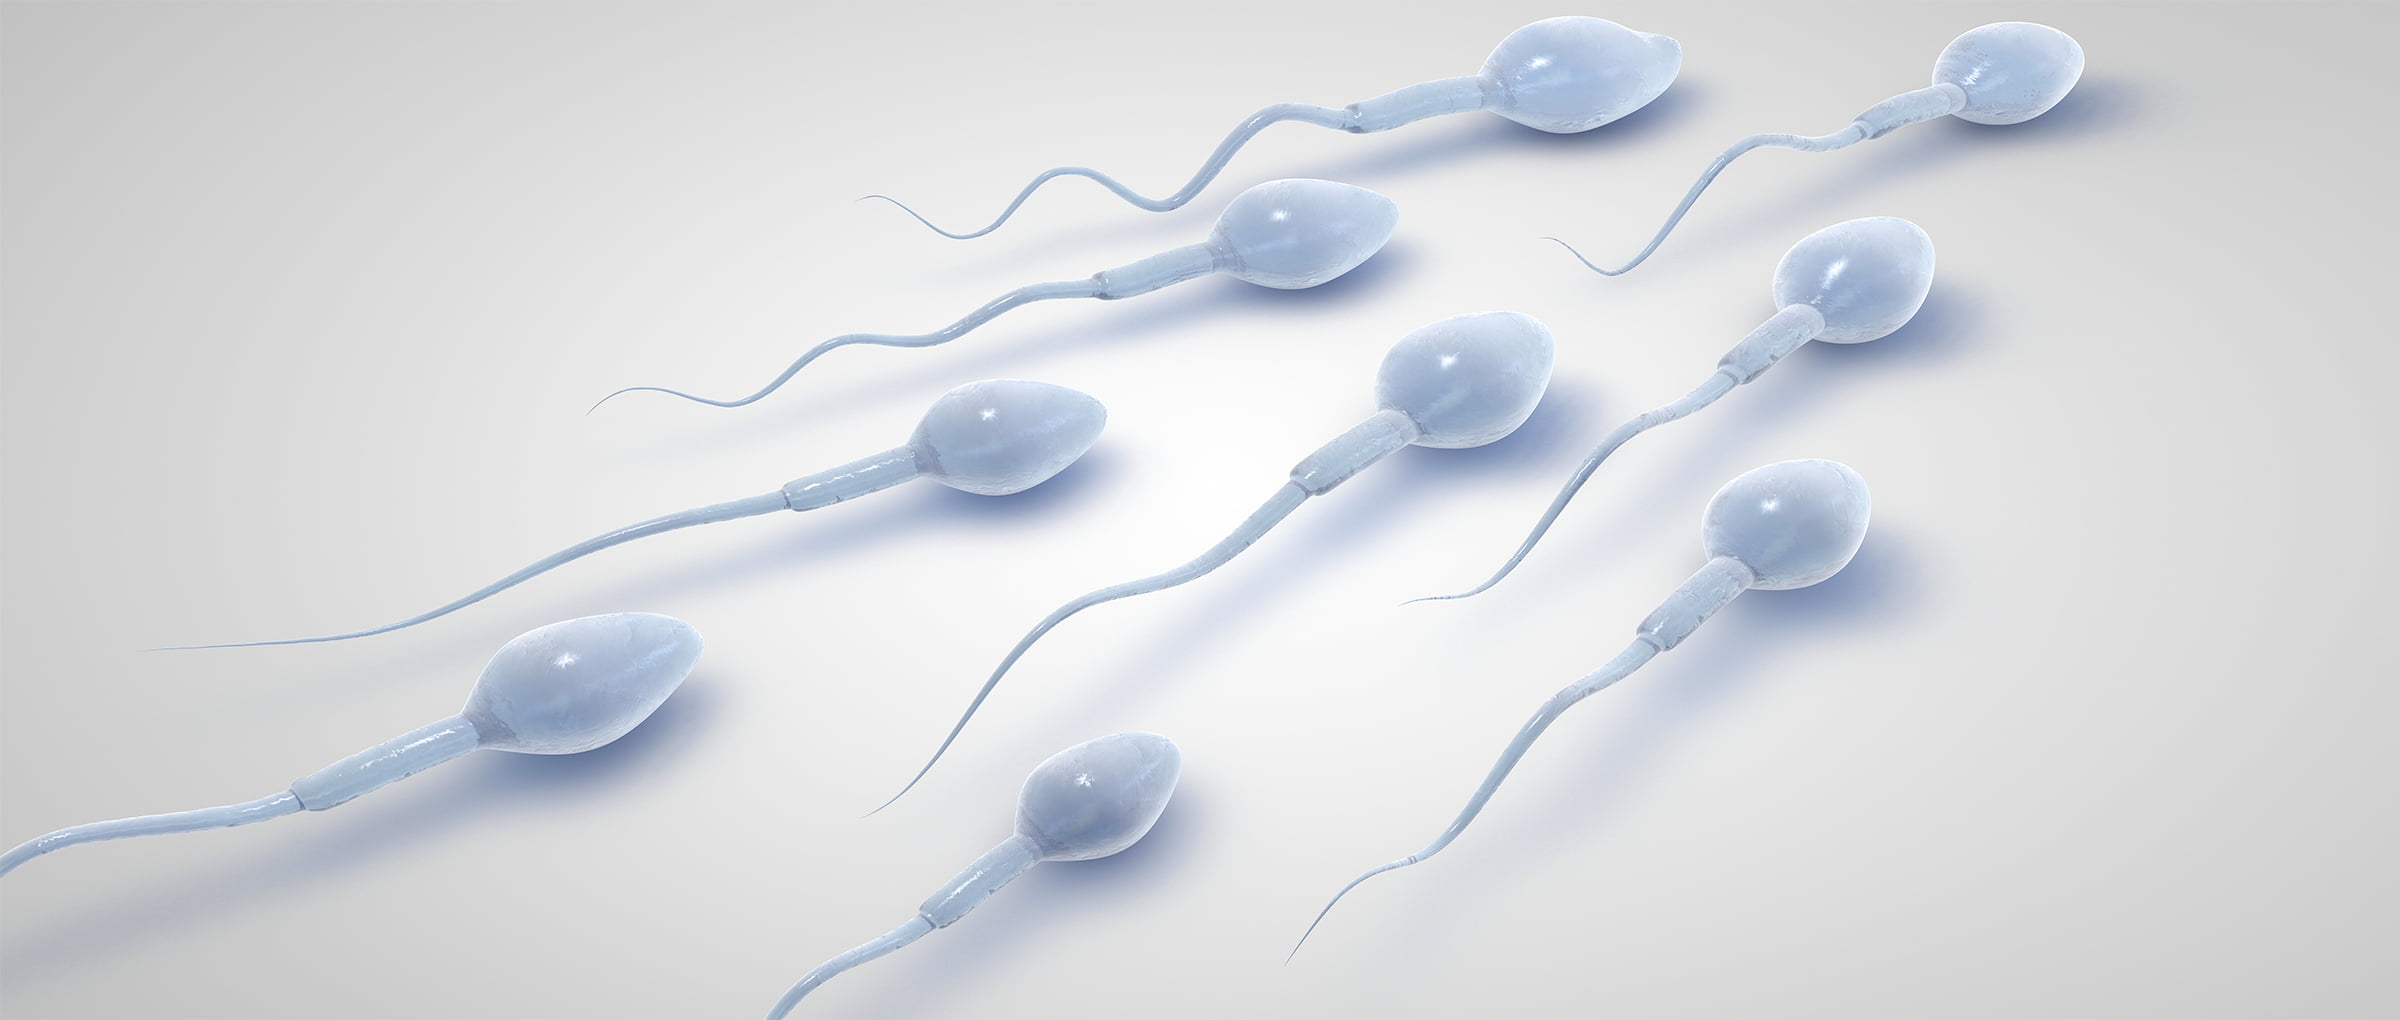 Sperm donor legal rights australia